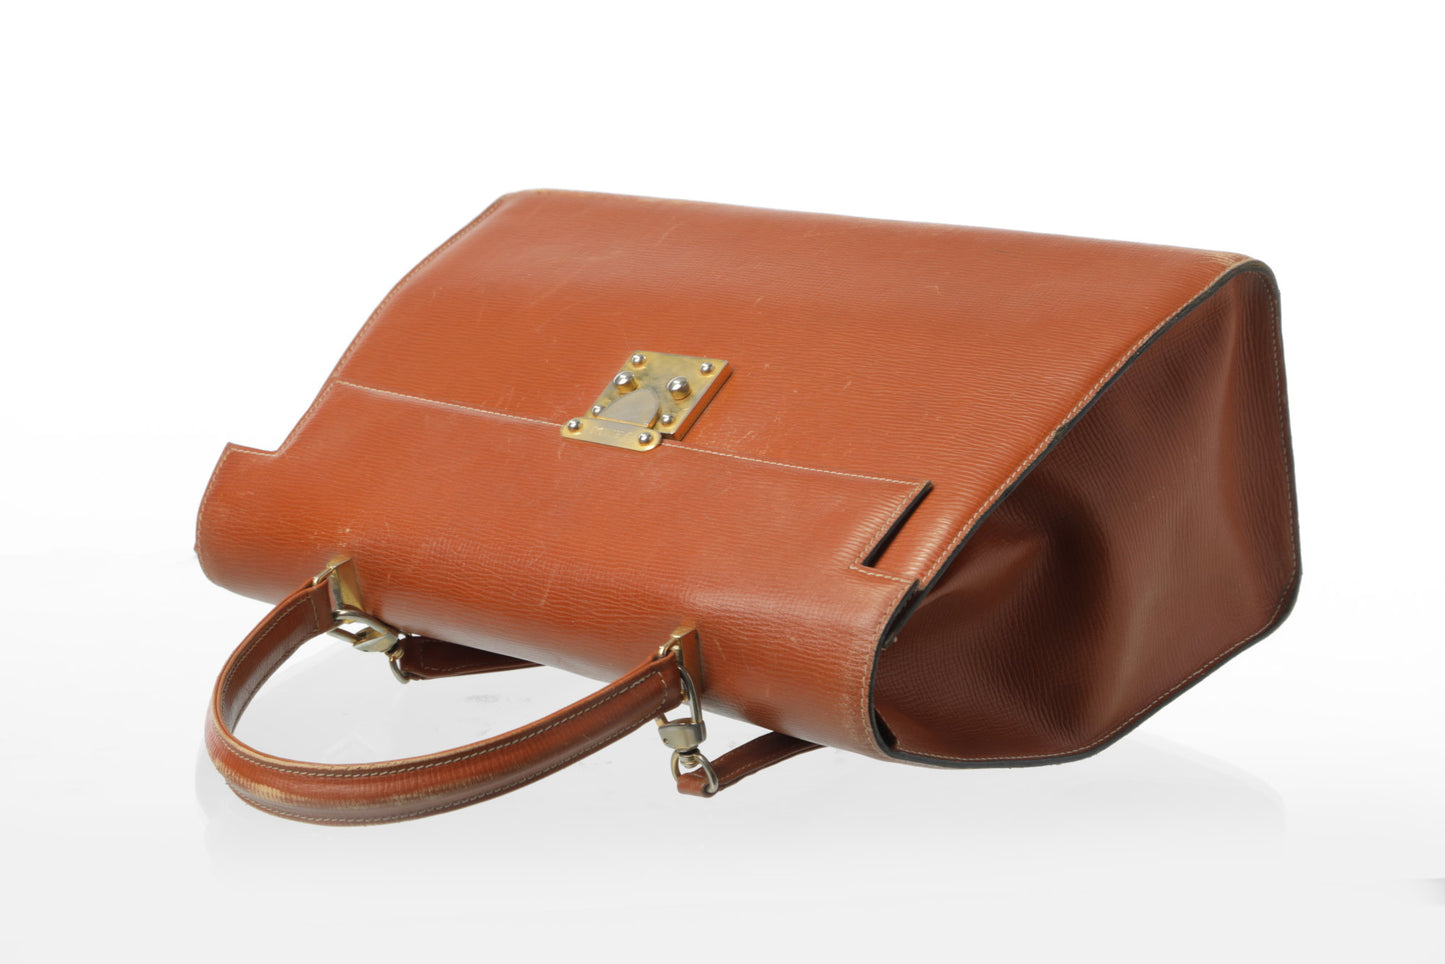 Fendi briefcase bag in leather